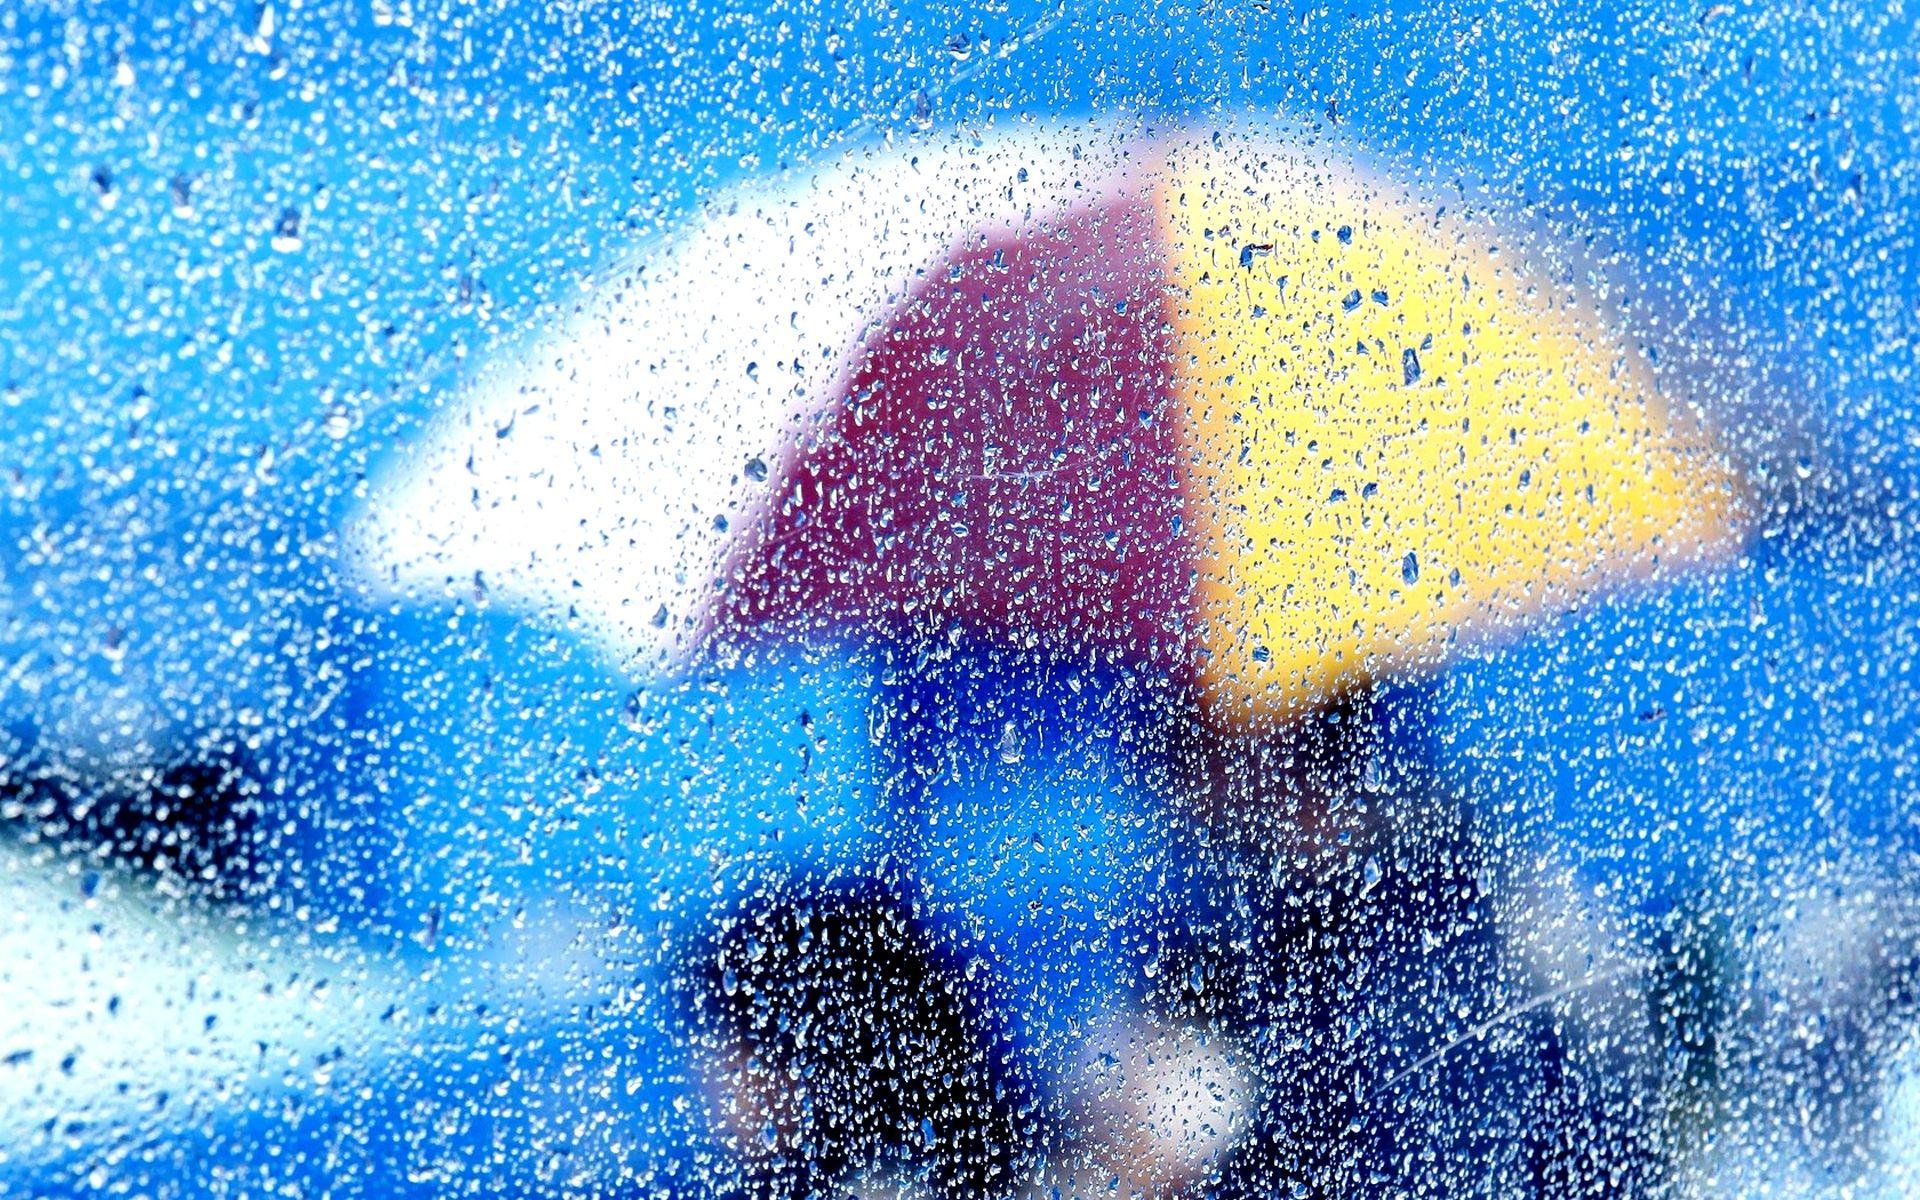 Rainy Day image. Beautiful image HD Picture & Desktop Wallpaper